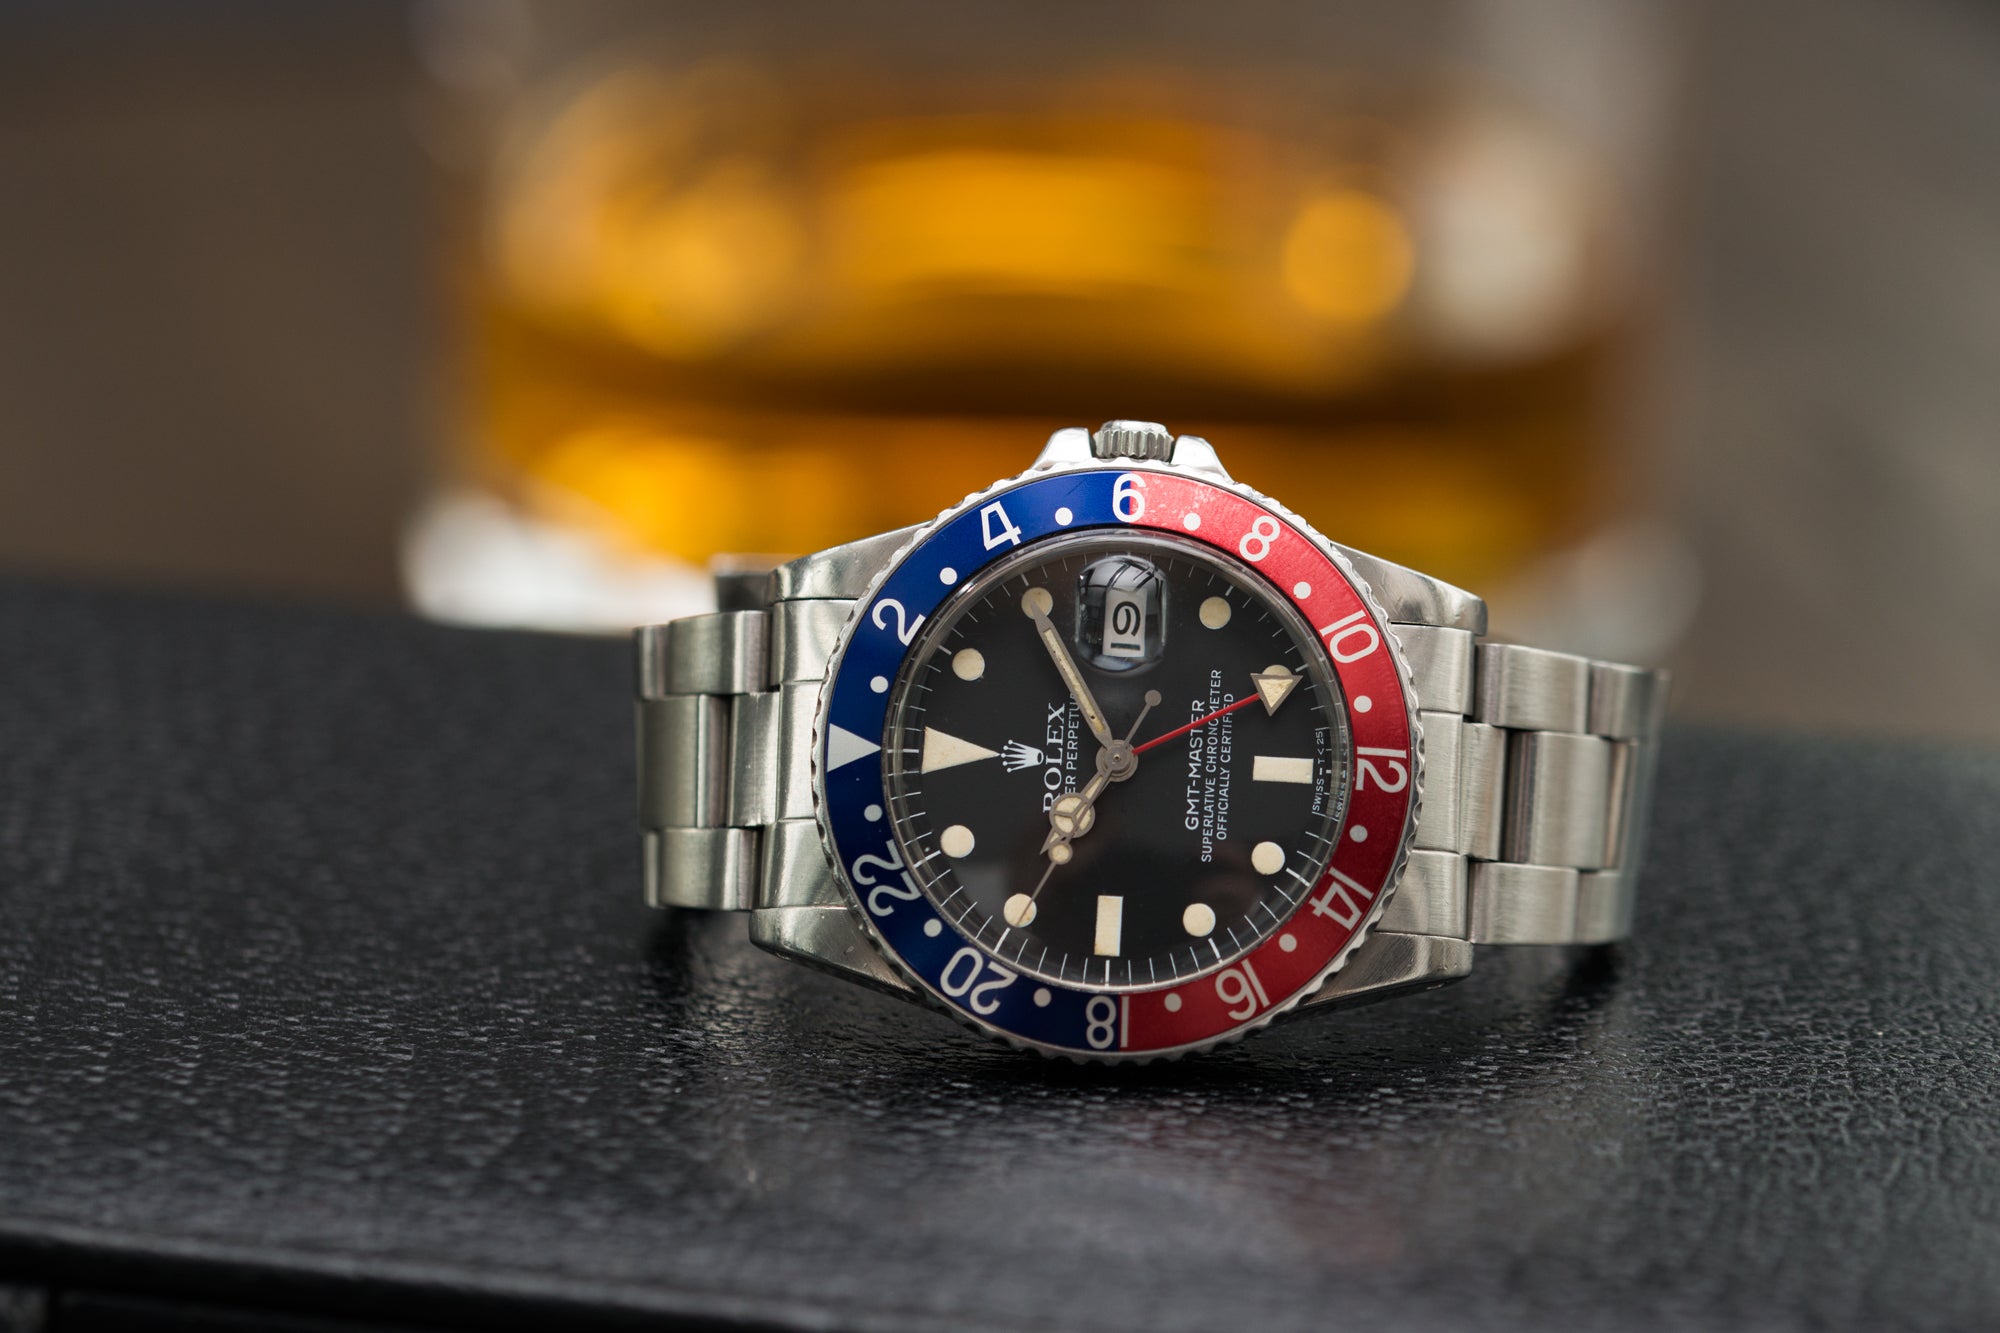 vintage Rolex 16750 GMT-Master Pepsi bezel steel sport traveller watch for sale online at A Collected Man London vintage watch specialist